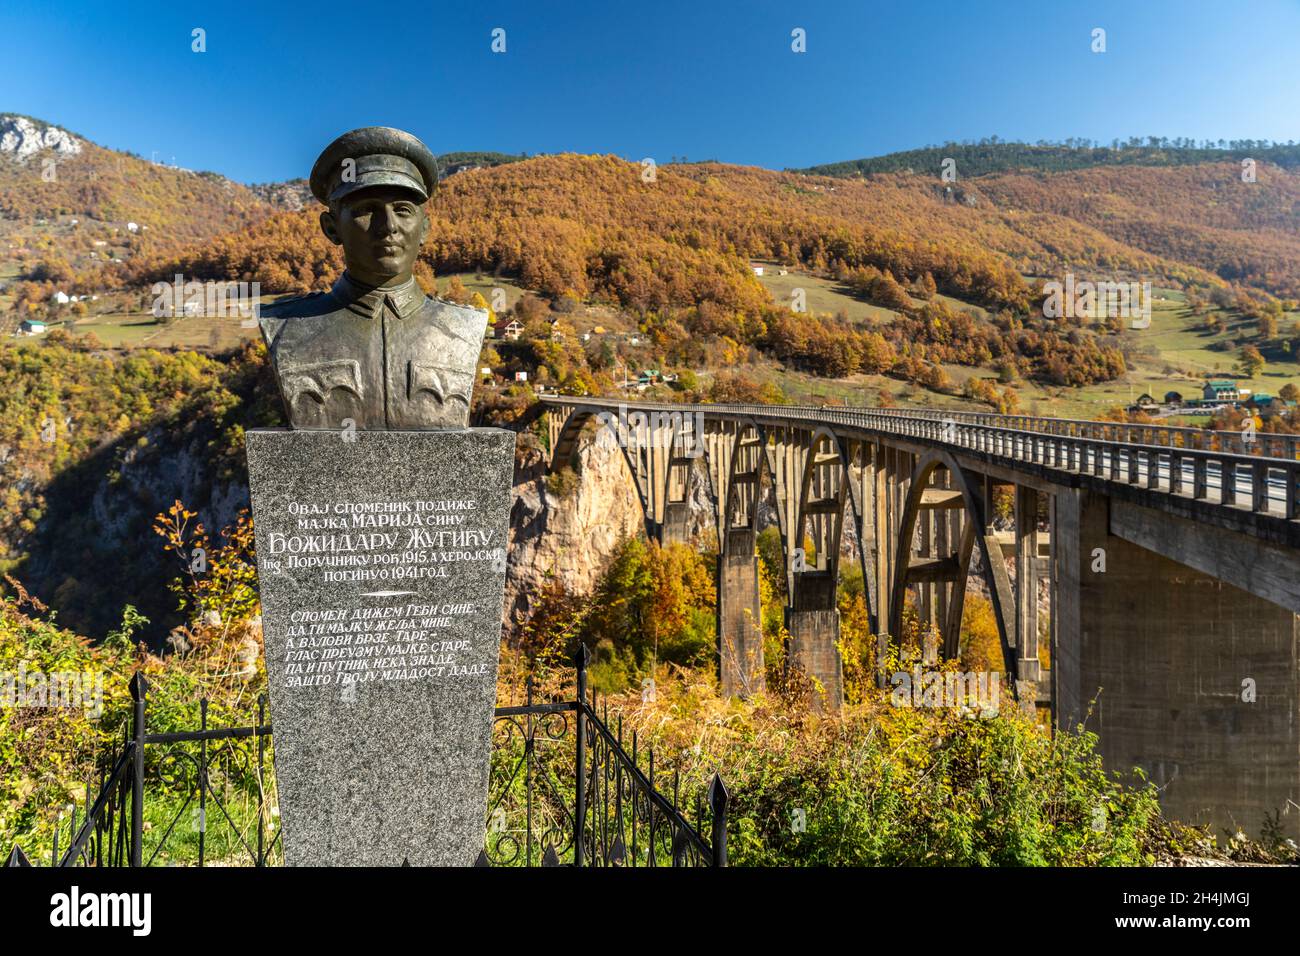 Statue des planers Mijat S. Trojanović vor der Tara-Brücke im Herbst, Pljevlja, Monténégro, Europa | Concepteur de pont Mijat S. Trojanović Statue et Banque D'Images